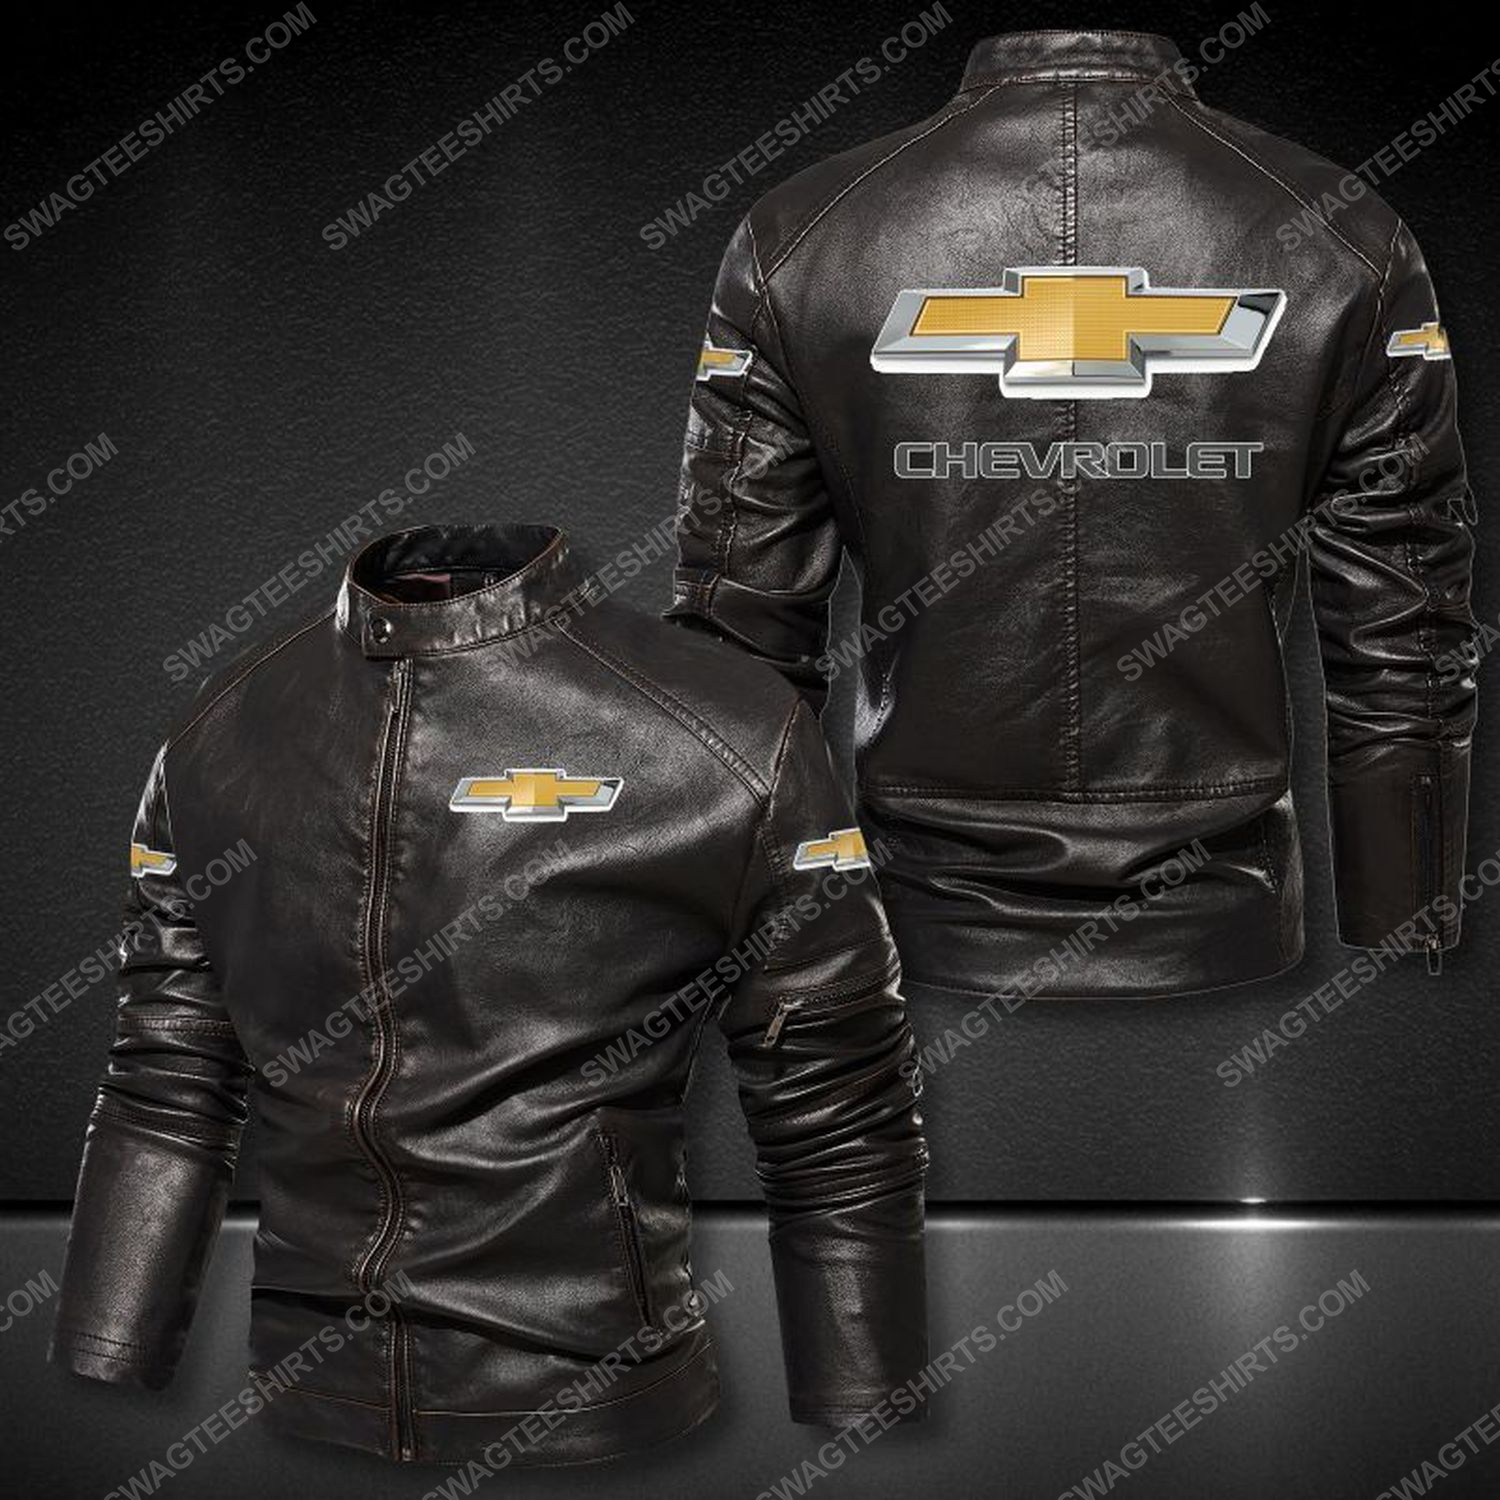 The chevrolet motor car company sports leather jacket 1 - Copy